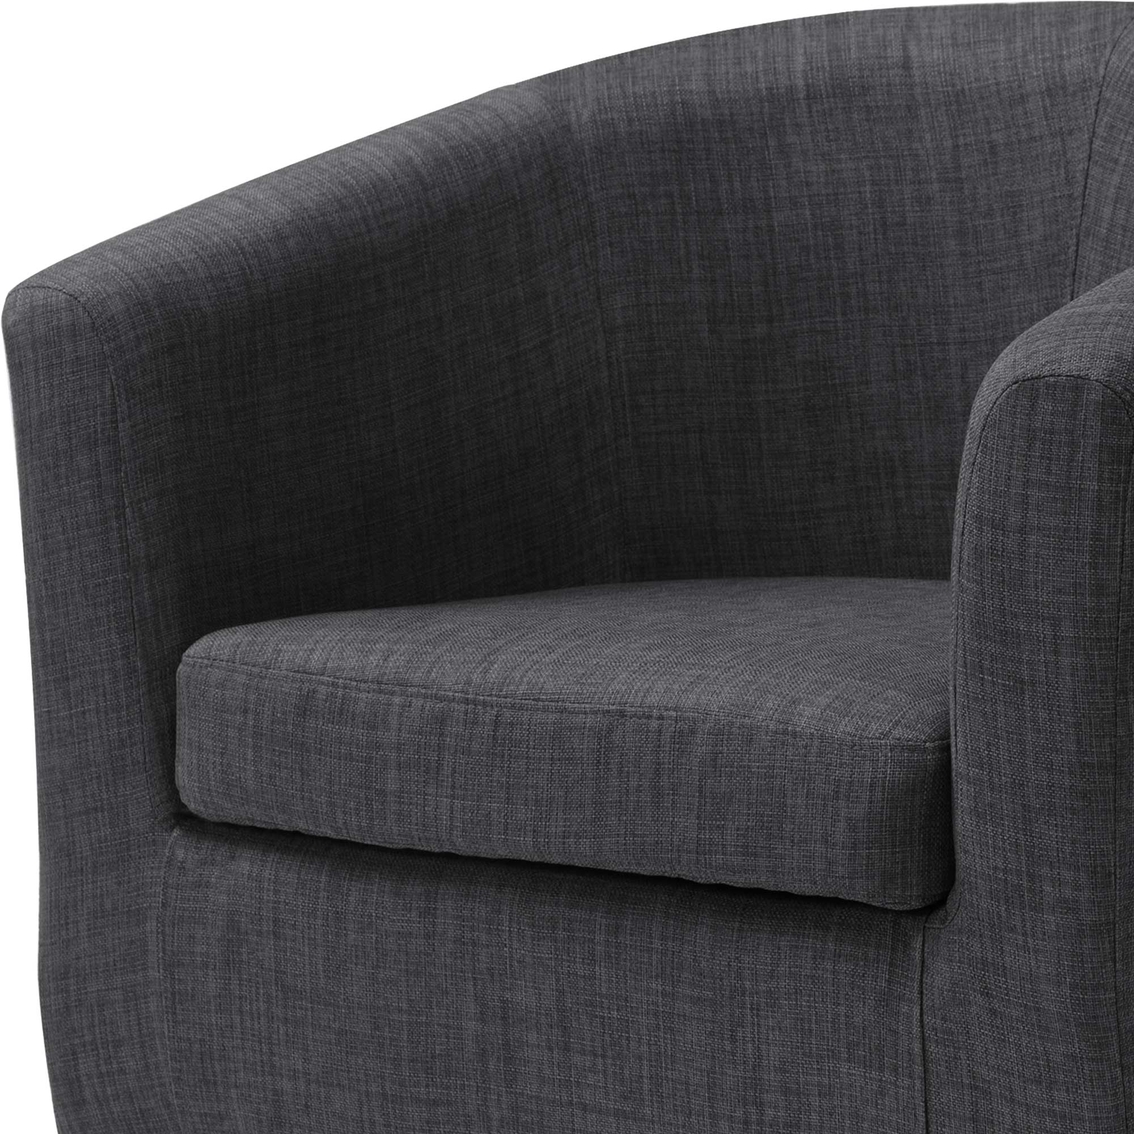 CorLiving Antonio  Fabric Tub Chair - Image 3 of 6